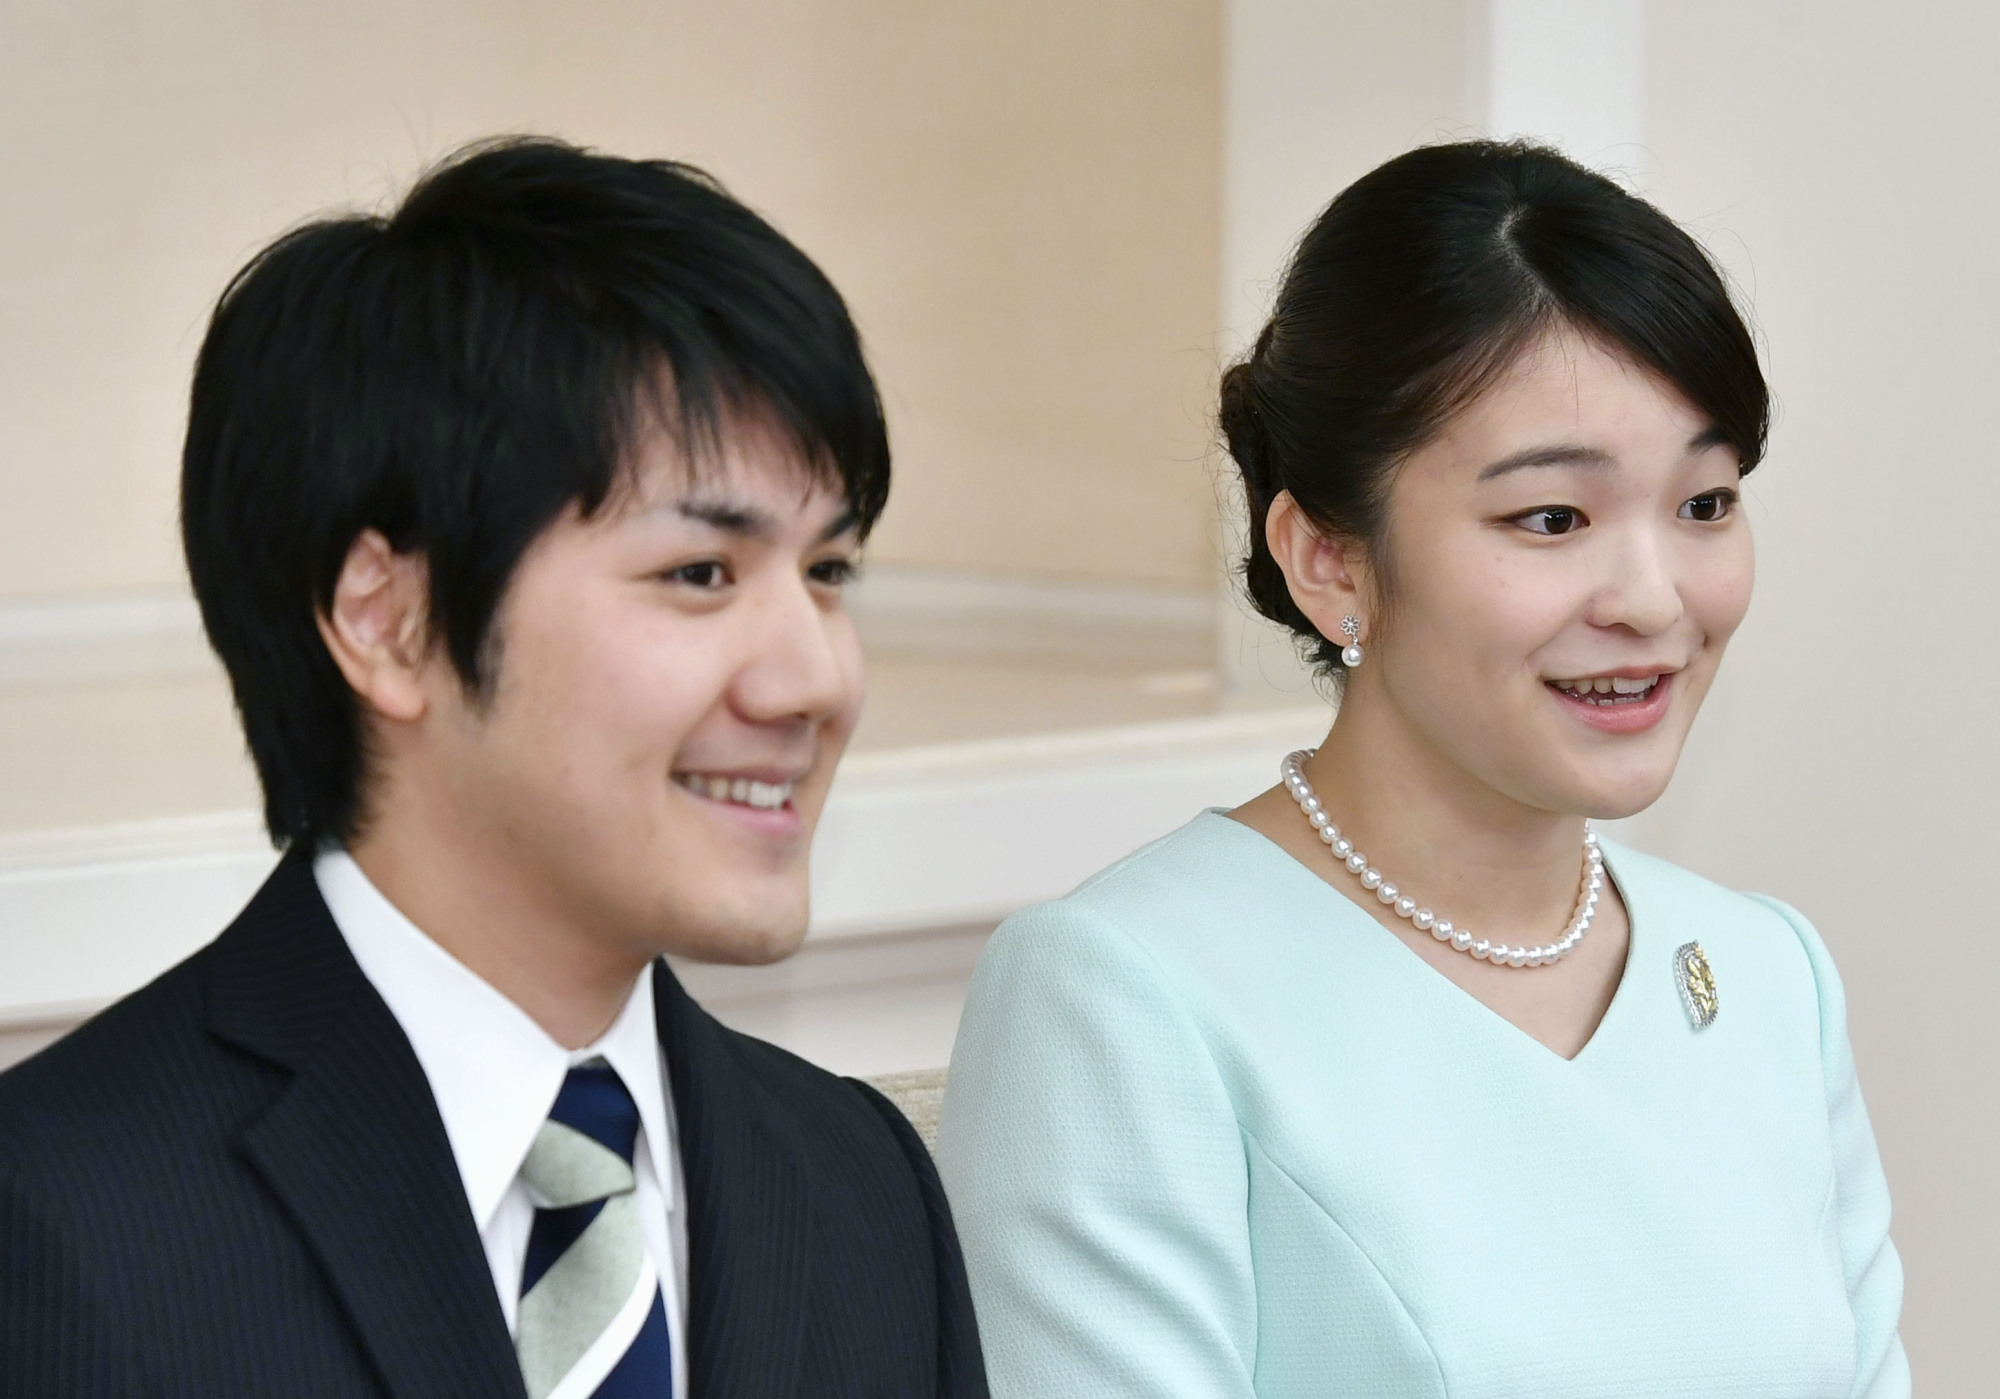 Princess Mako and her fiance, Kei Komuro, are seen in this photo taken on Sept. 3. | POOL / VIA KYODO